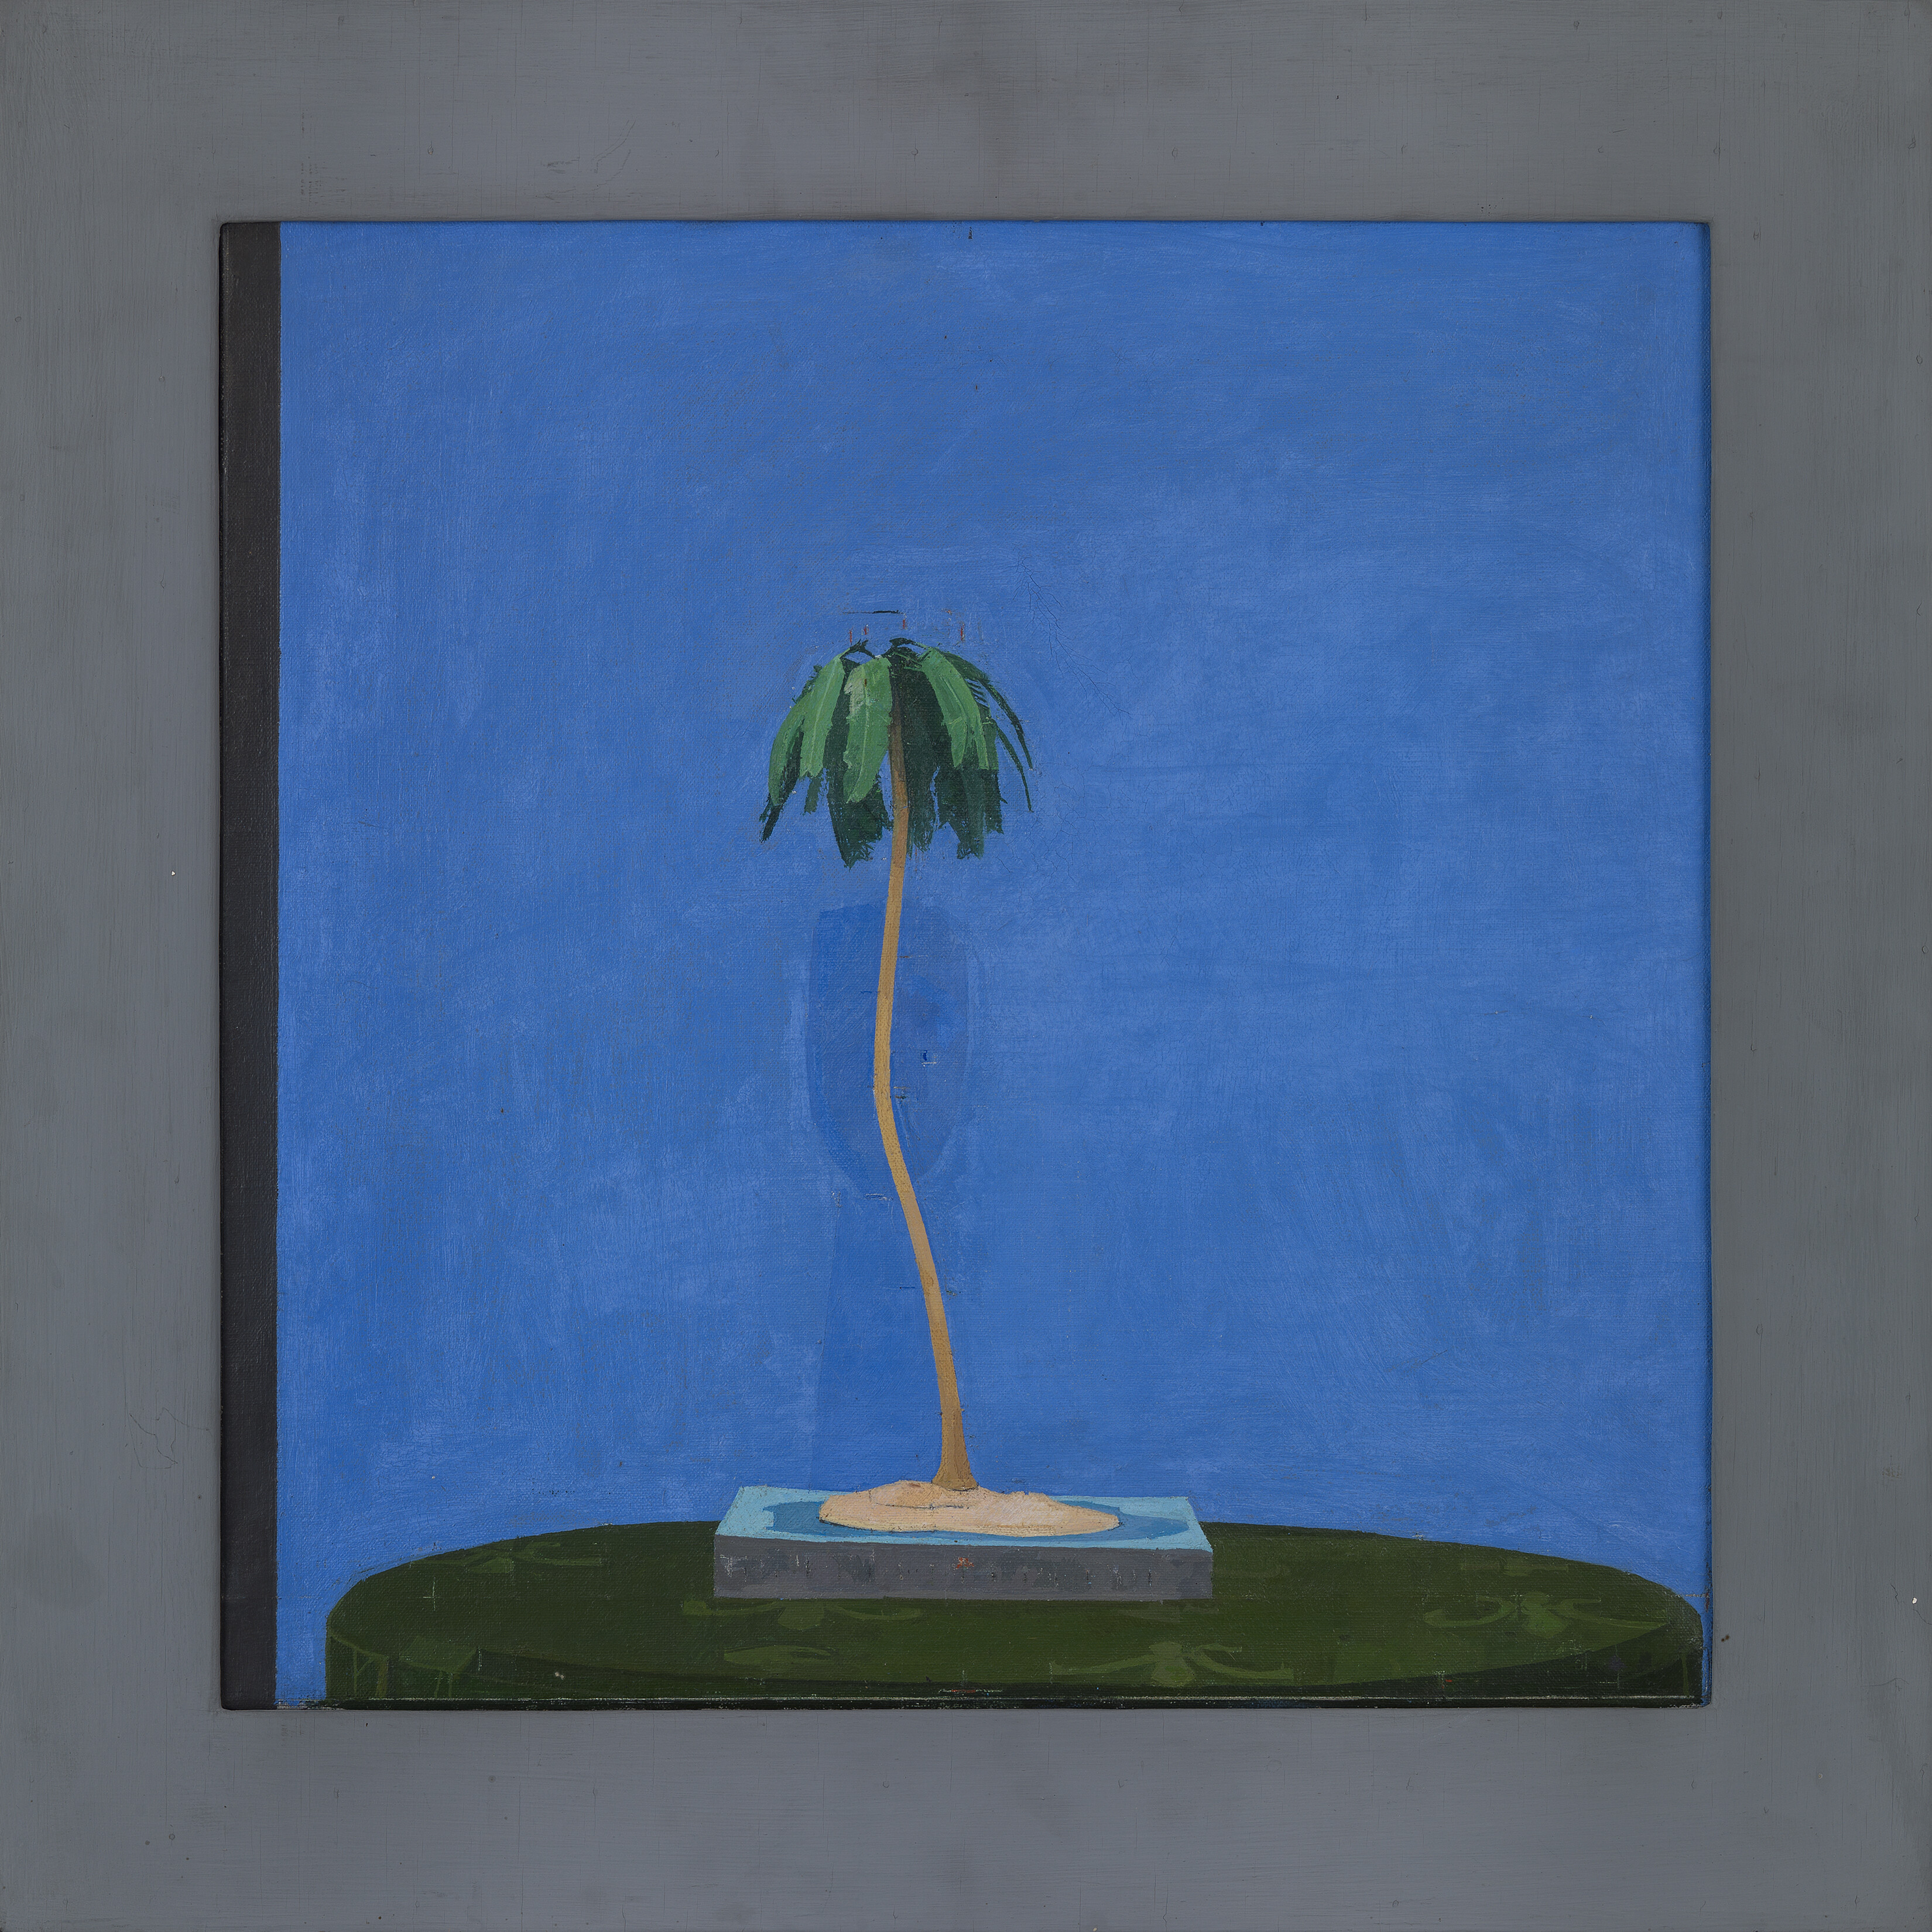 Euan Uglow, Palm Tree, 1971, oil on canvas, 44.2 x 44.2 cm.